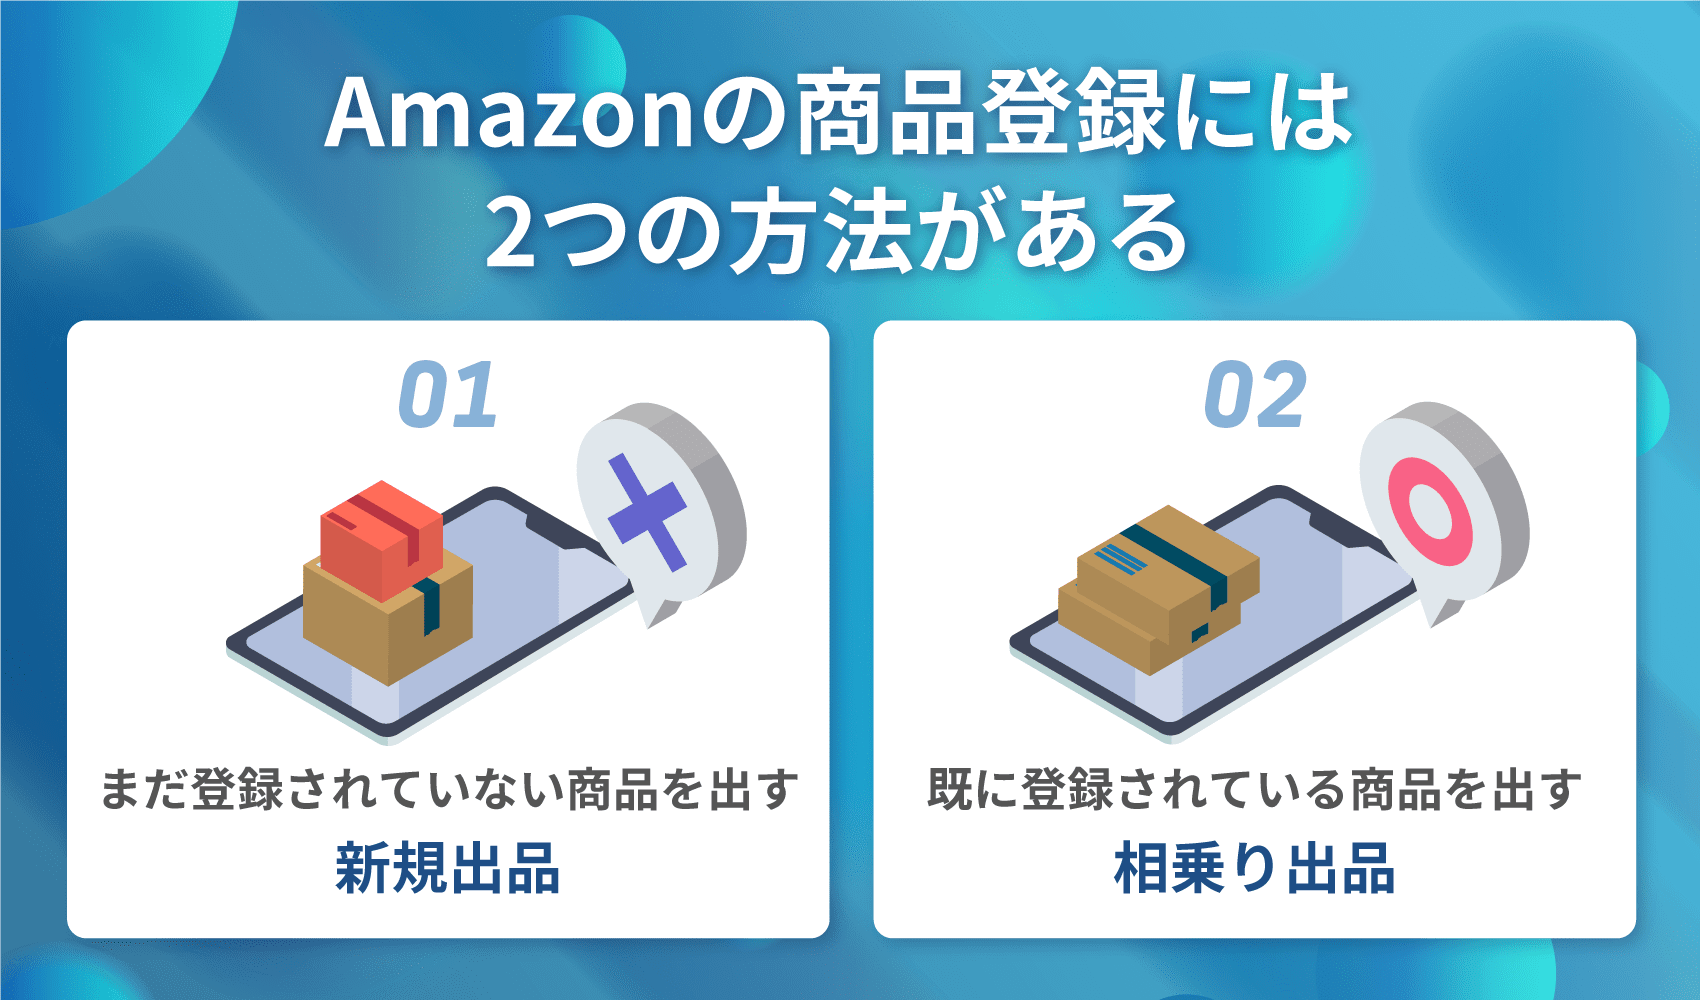 Amazonの商品登録には2つの方法がある 